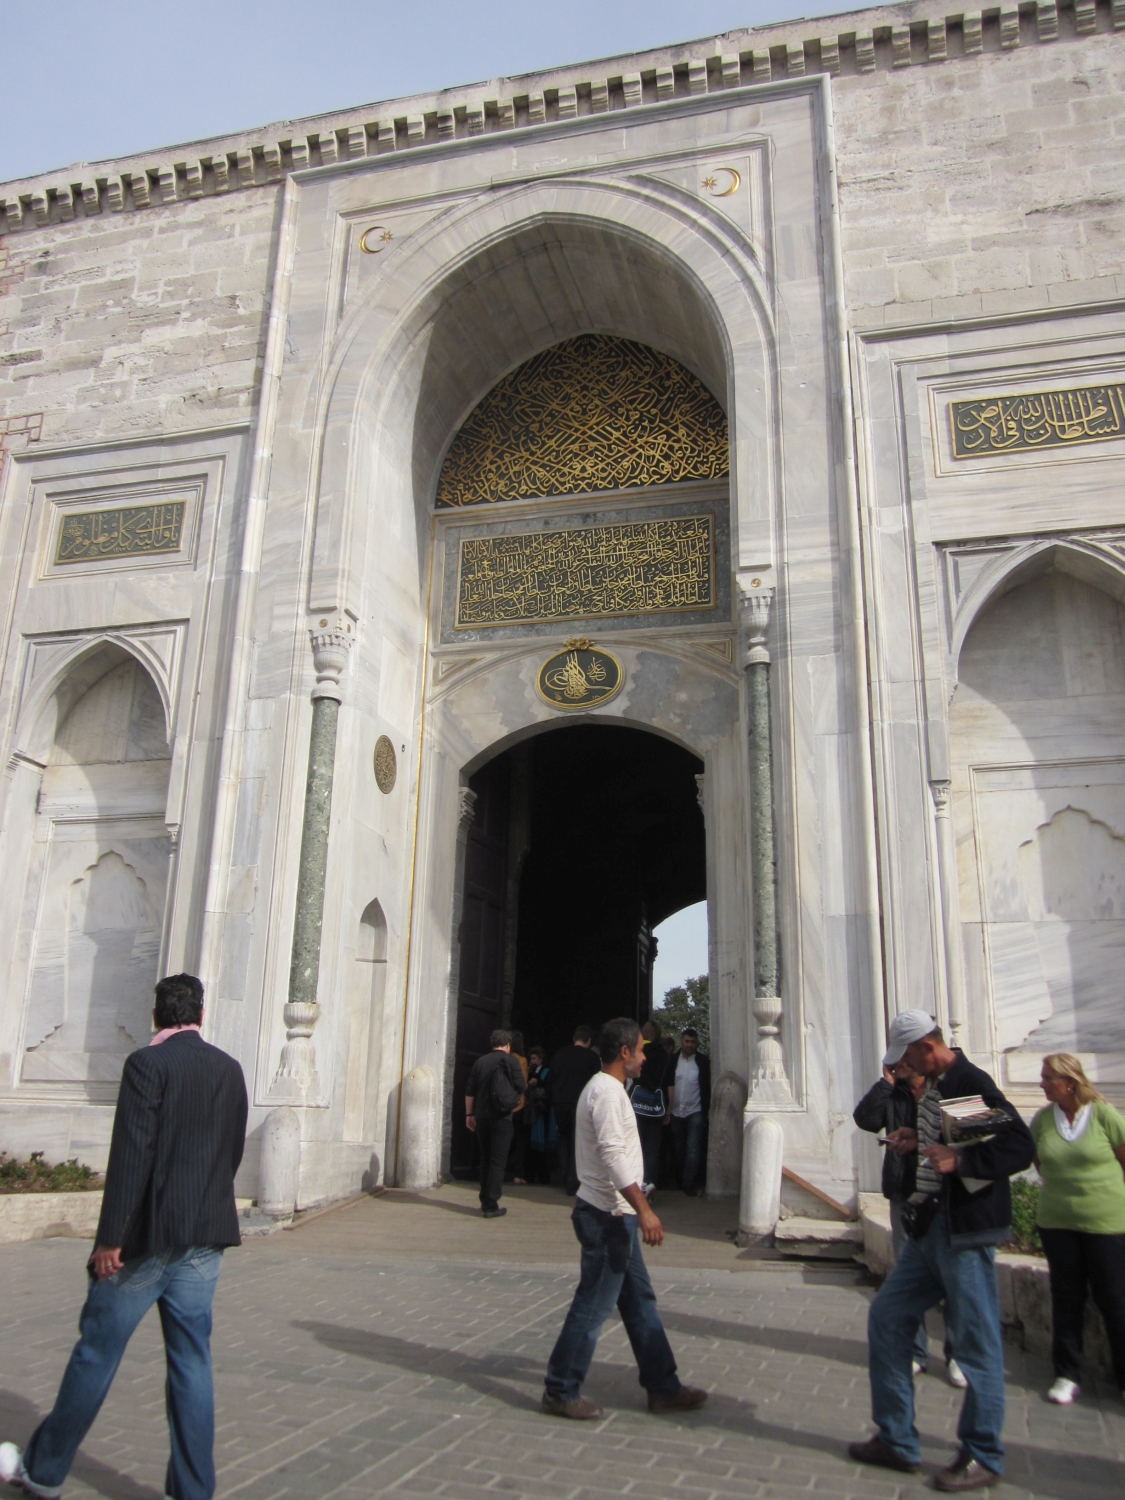 The Imperial Gate - Bâb-ı Hümâyûn (Imperial Gate)